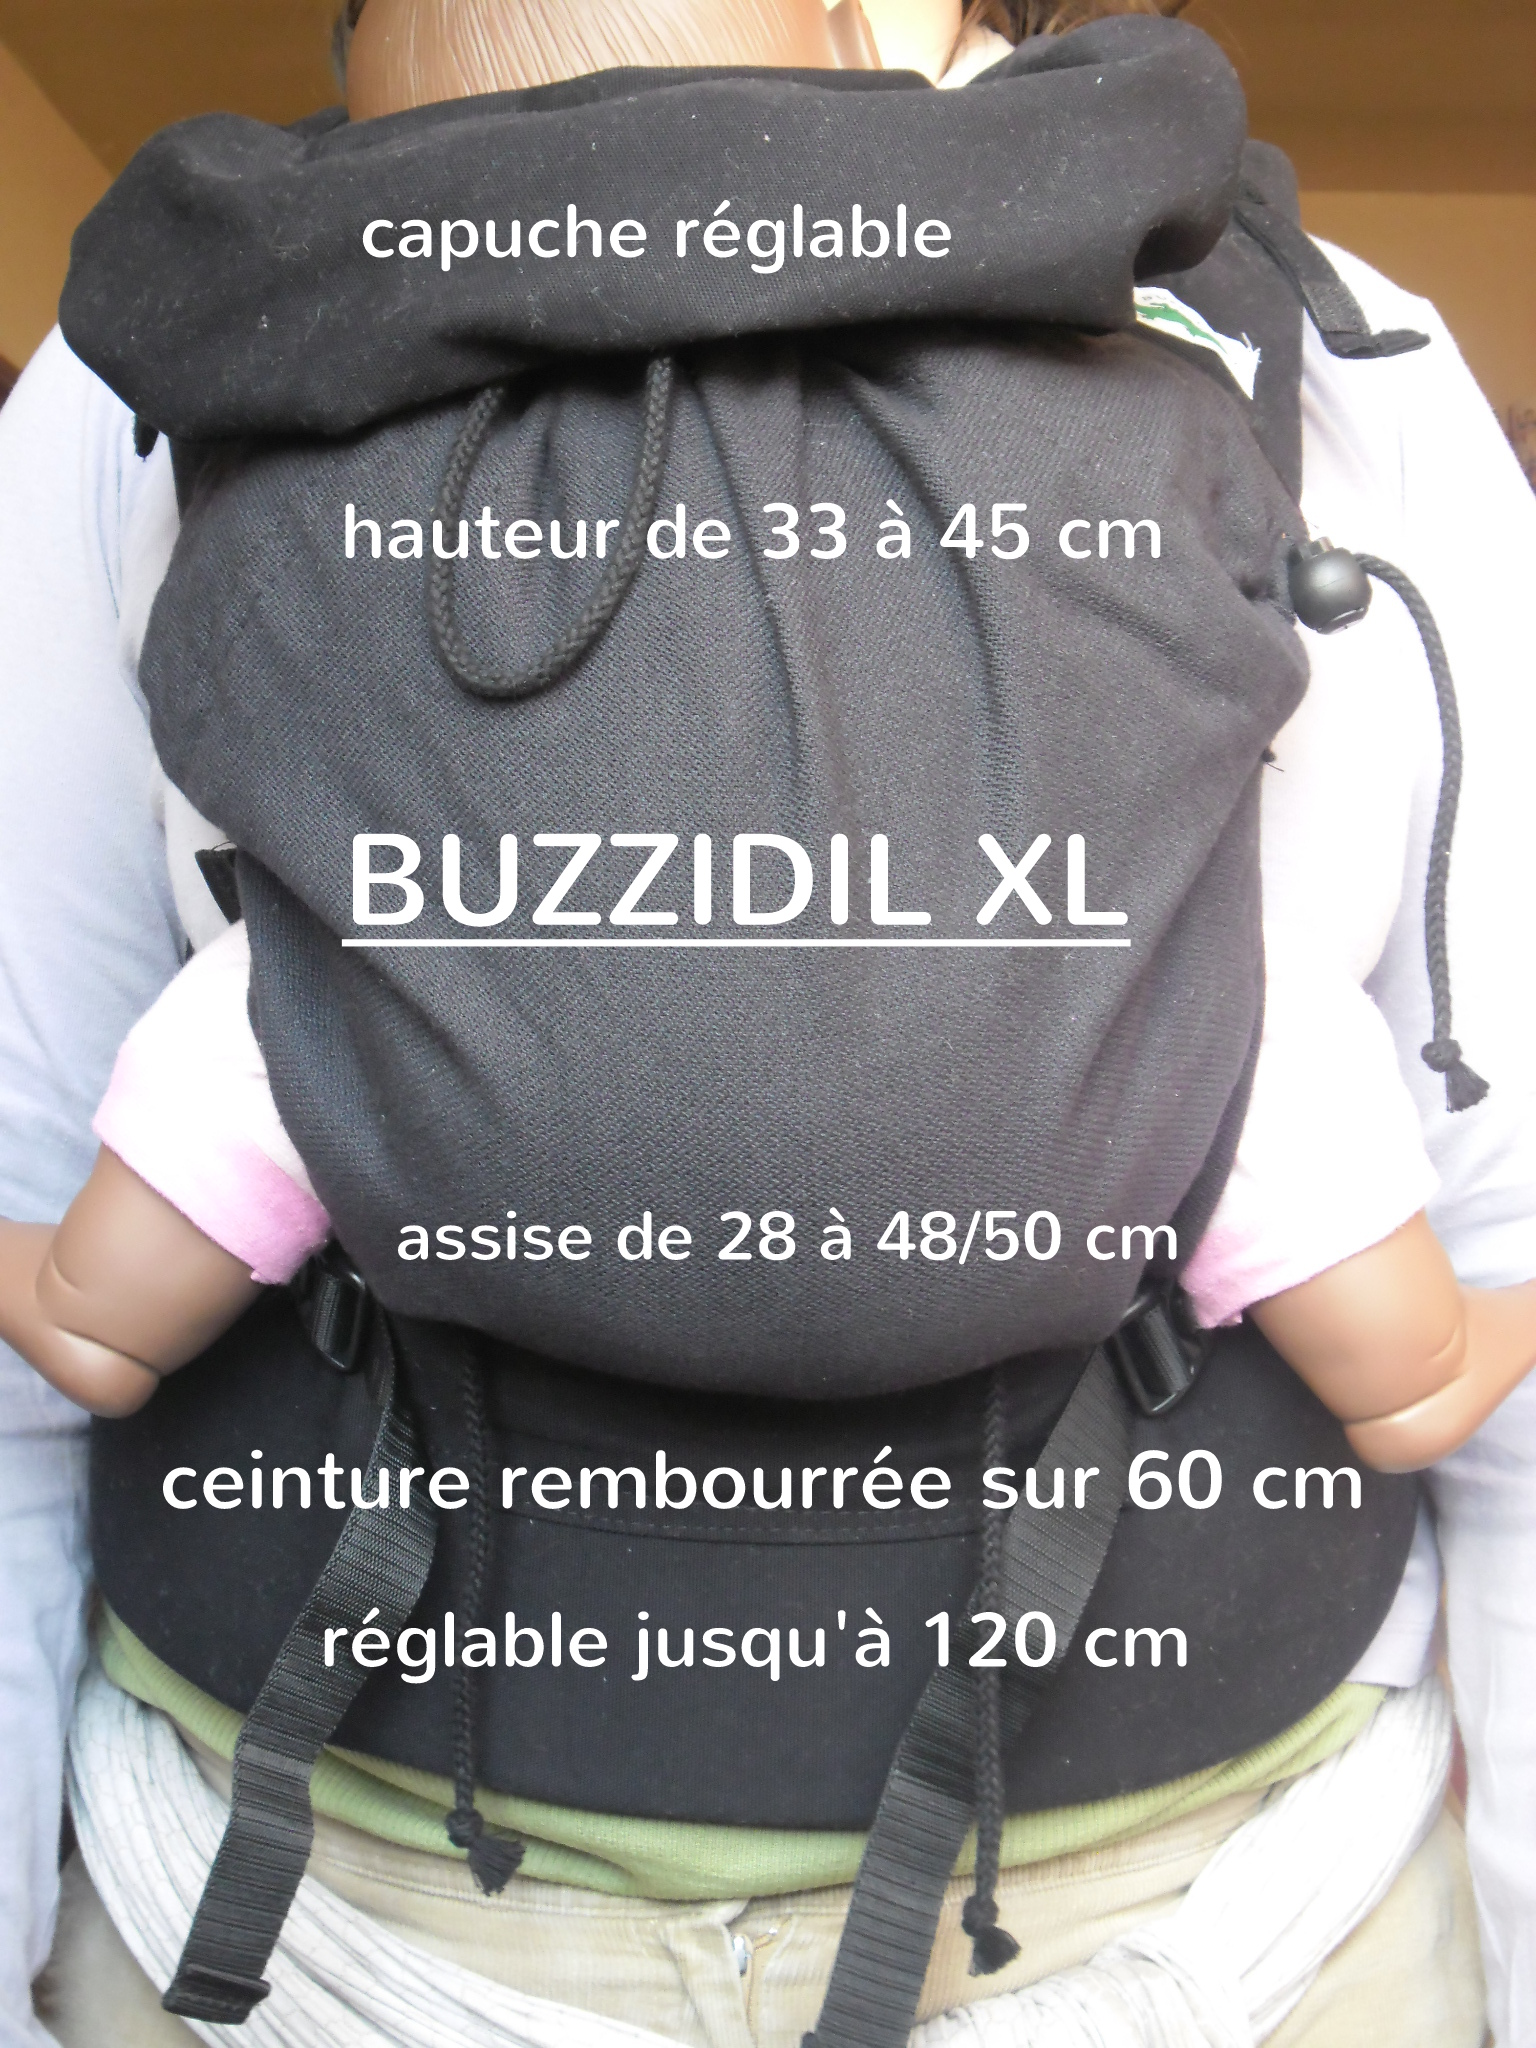 dimensions tablier Buzzidil XL